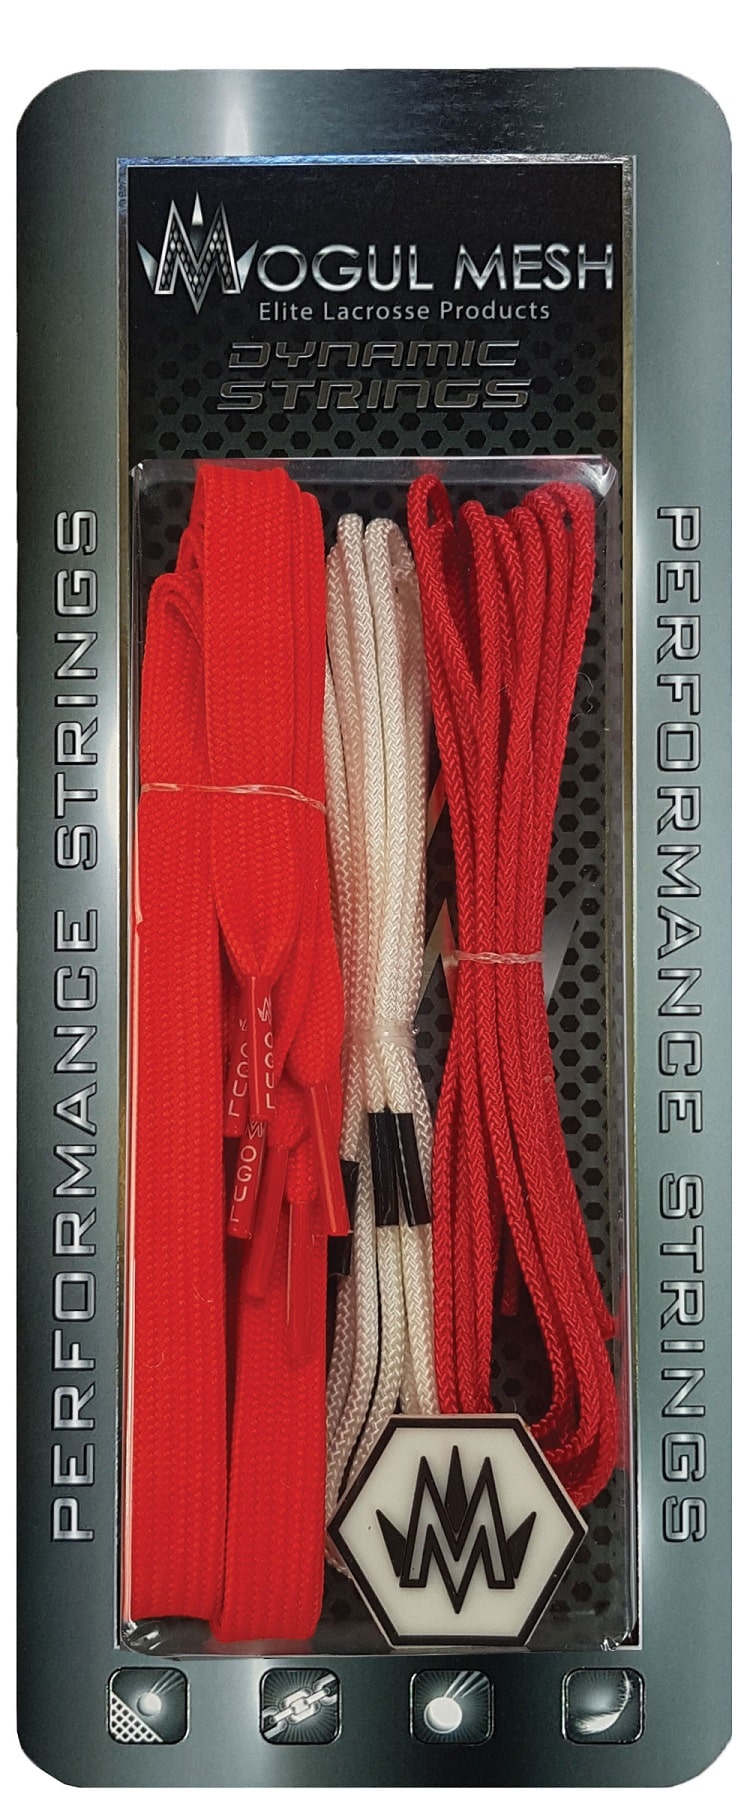 canada-colored-lacrosse-kit